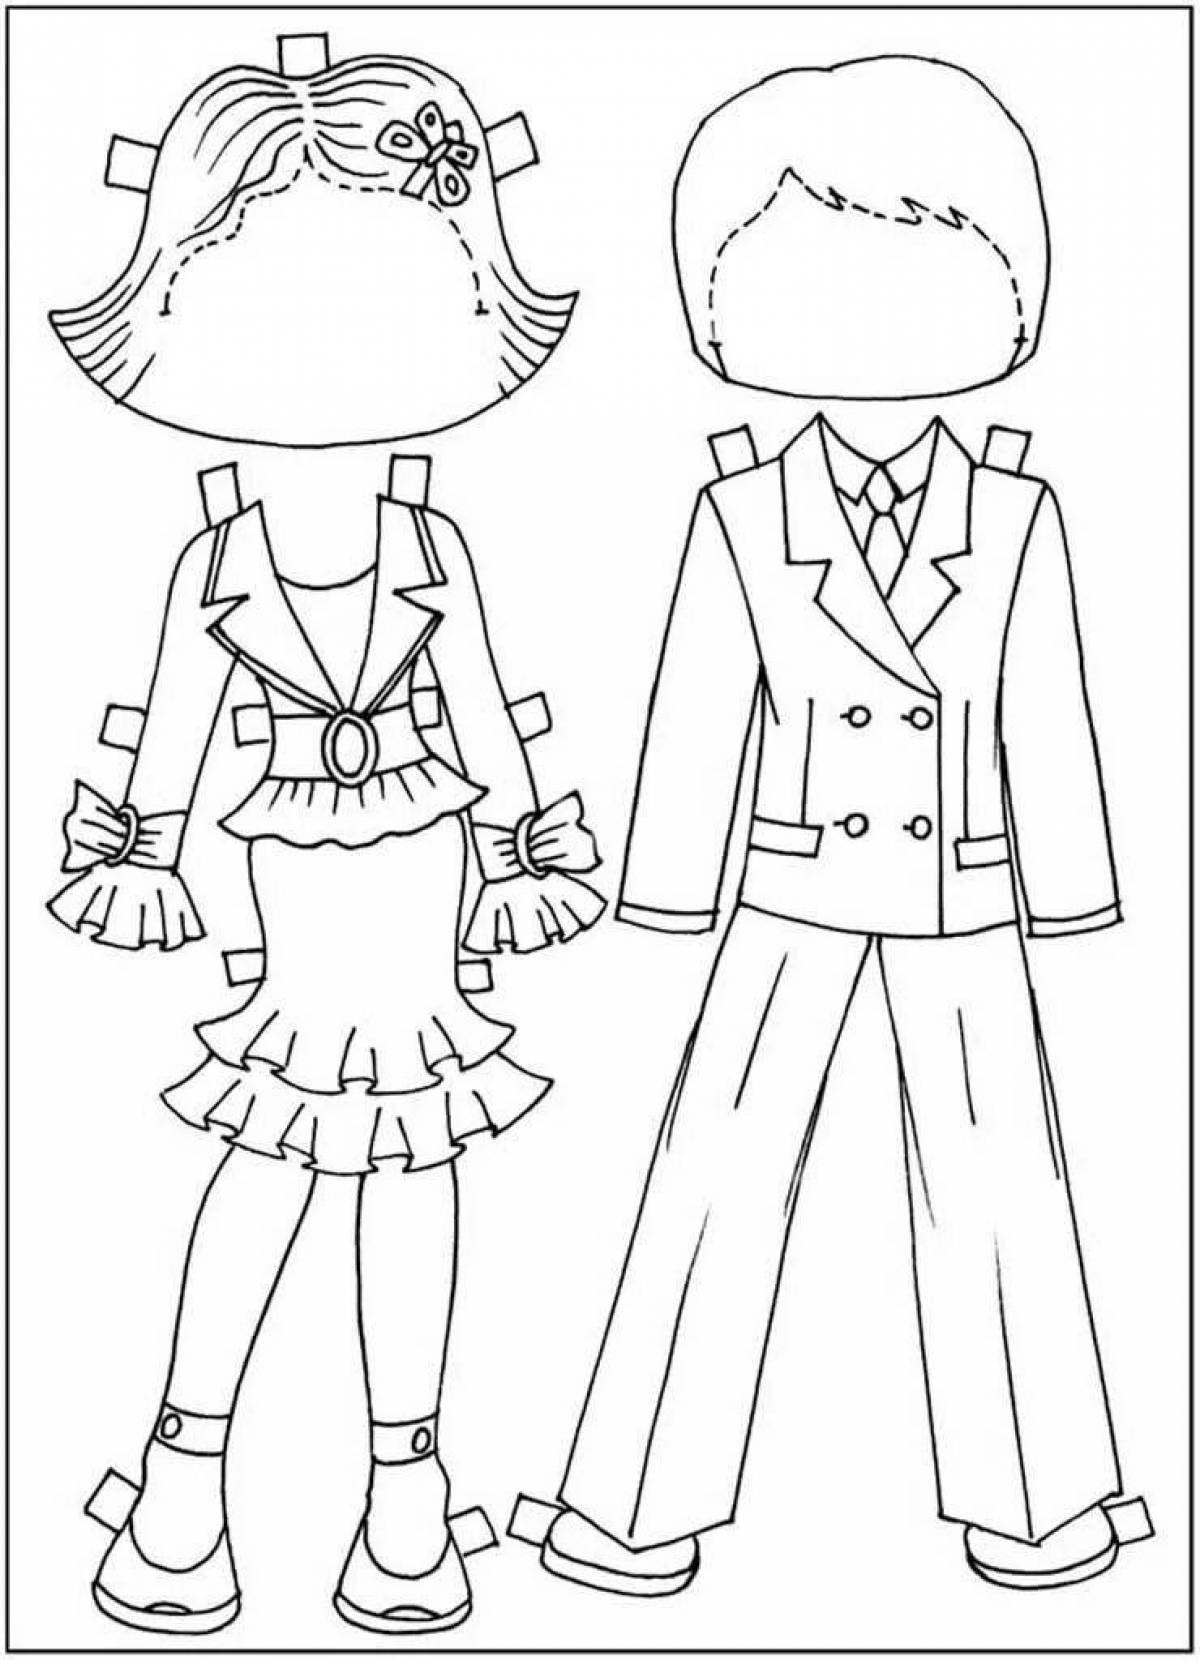 Animated school uniform coloring page